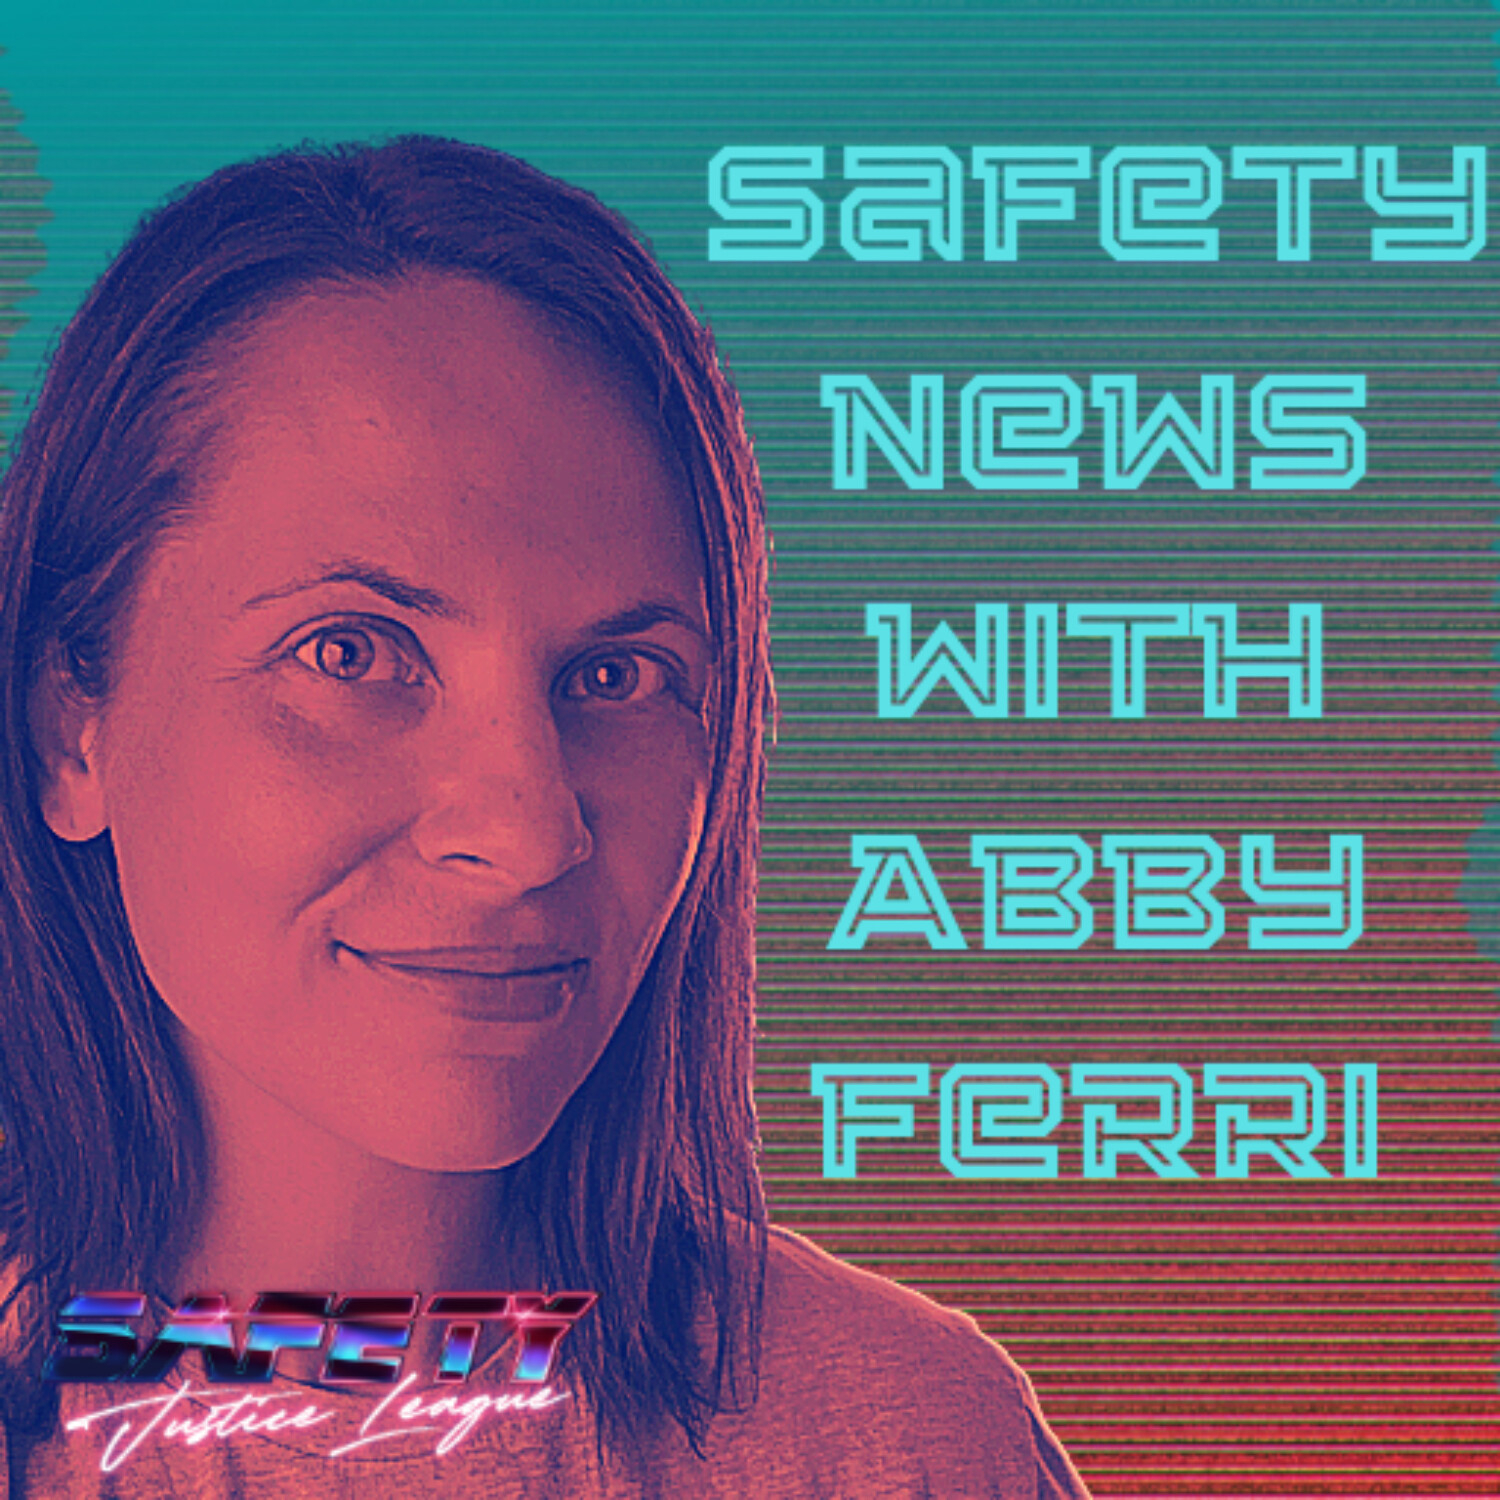 SJL Sh0rts: Safety News w/Abby Ferri - July 27, 2020